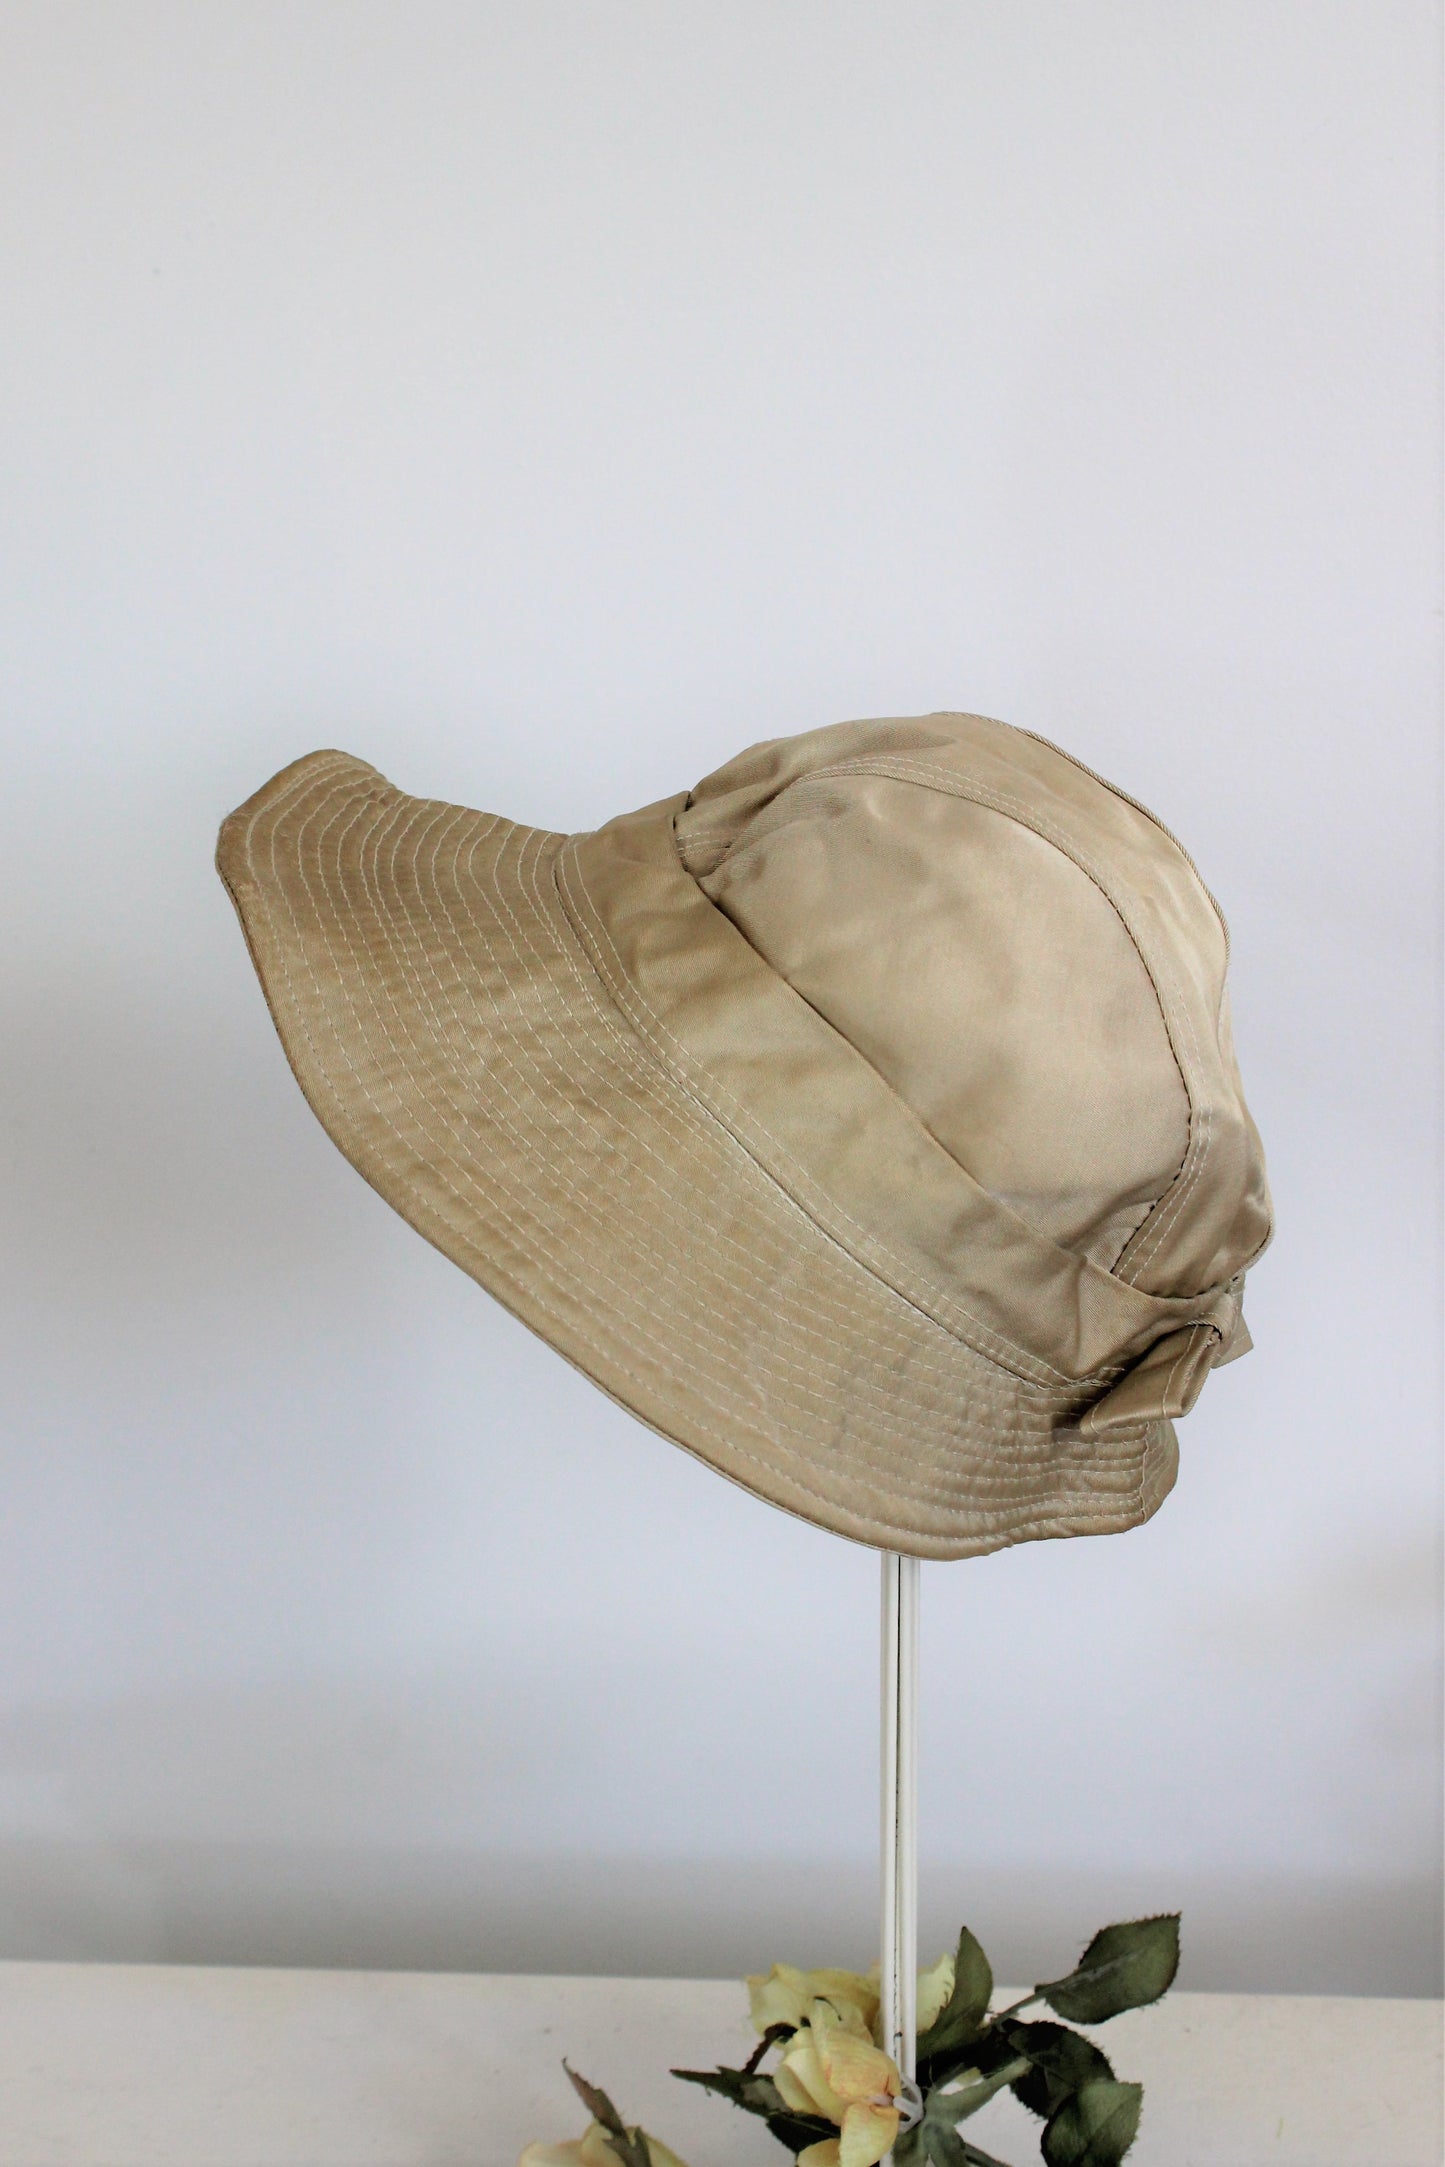 Vintage 1940s Women's Sun Hat by New York Creation